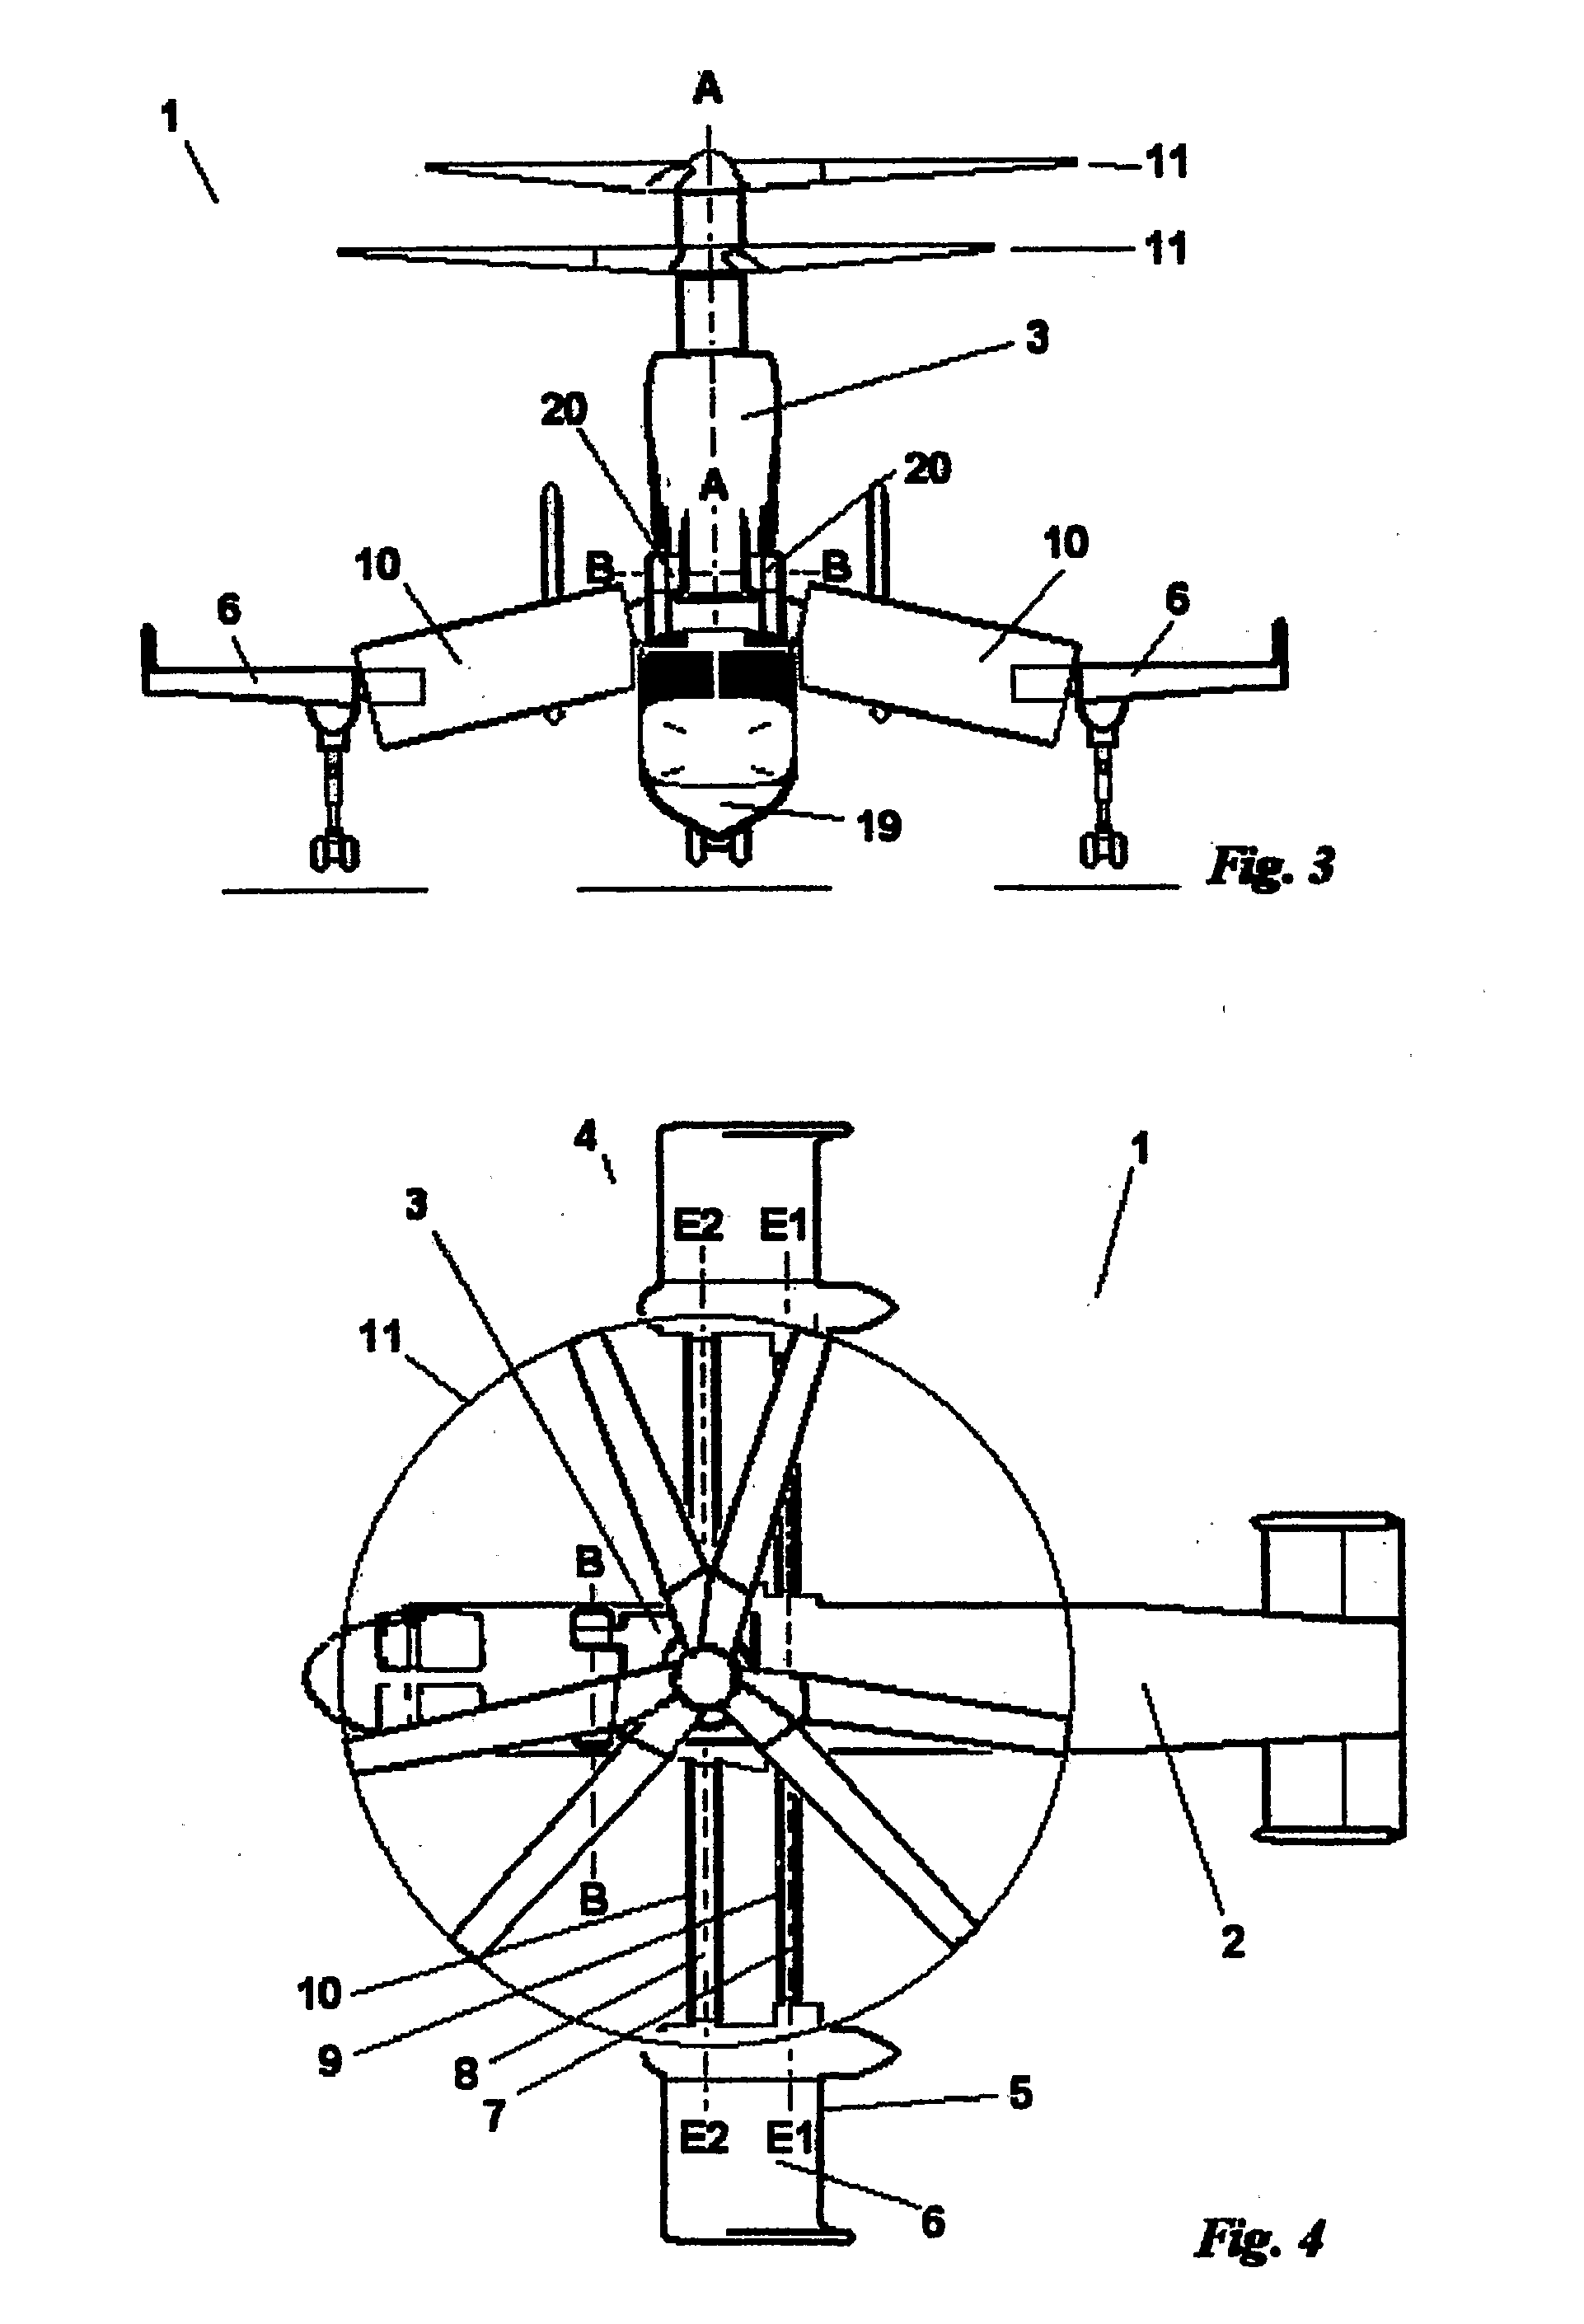 Tilt-rotor aircraft